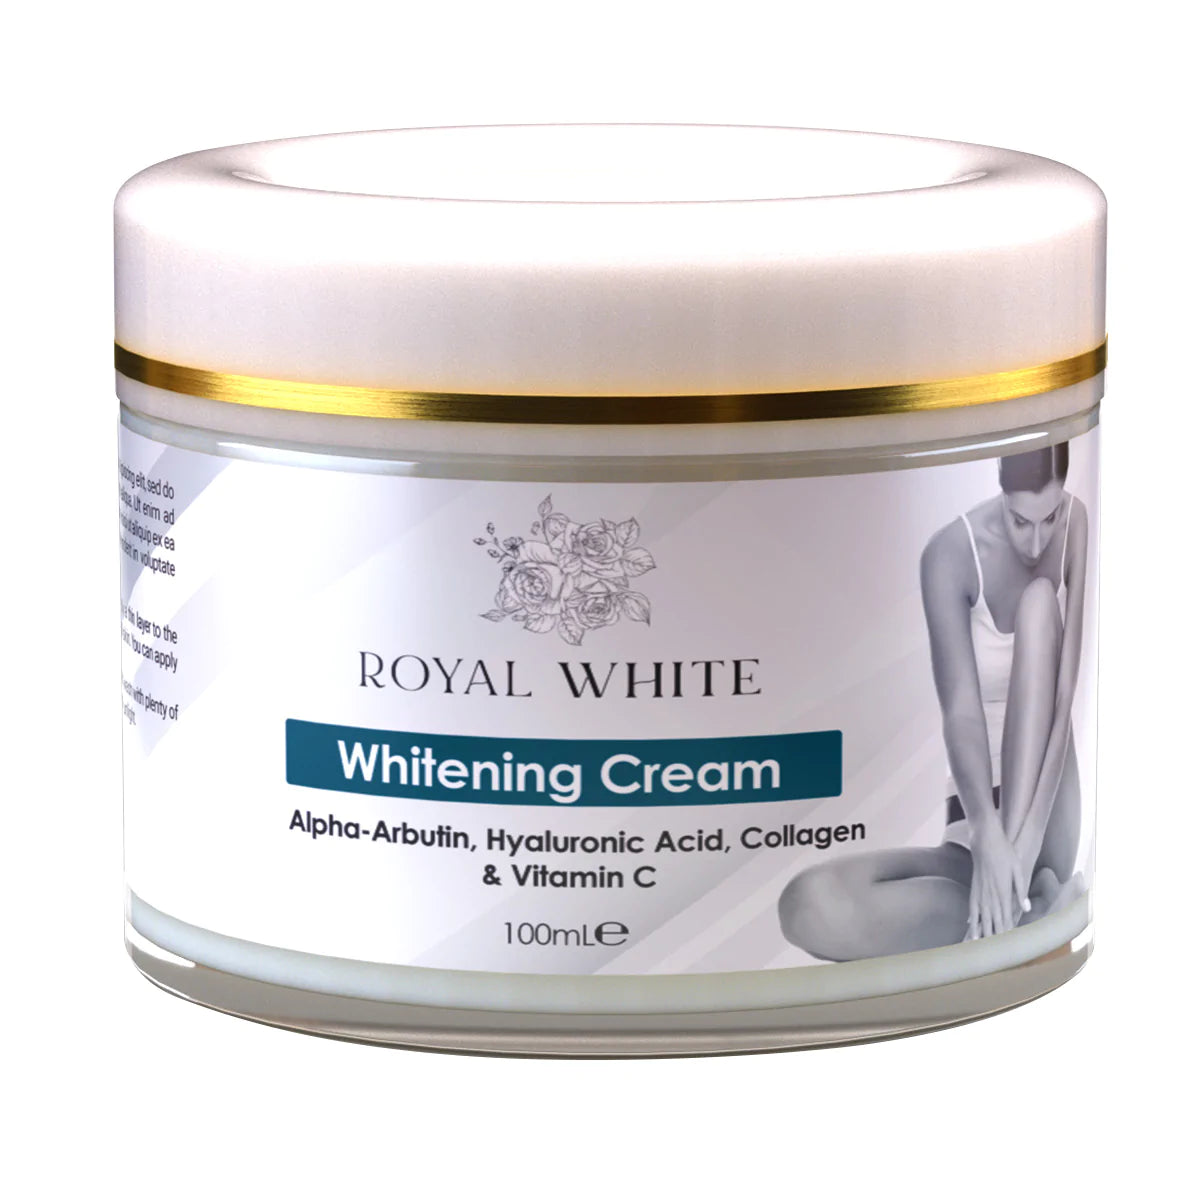 royale whitening cream